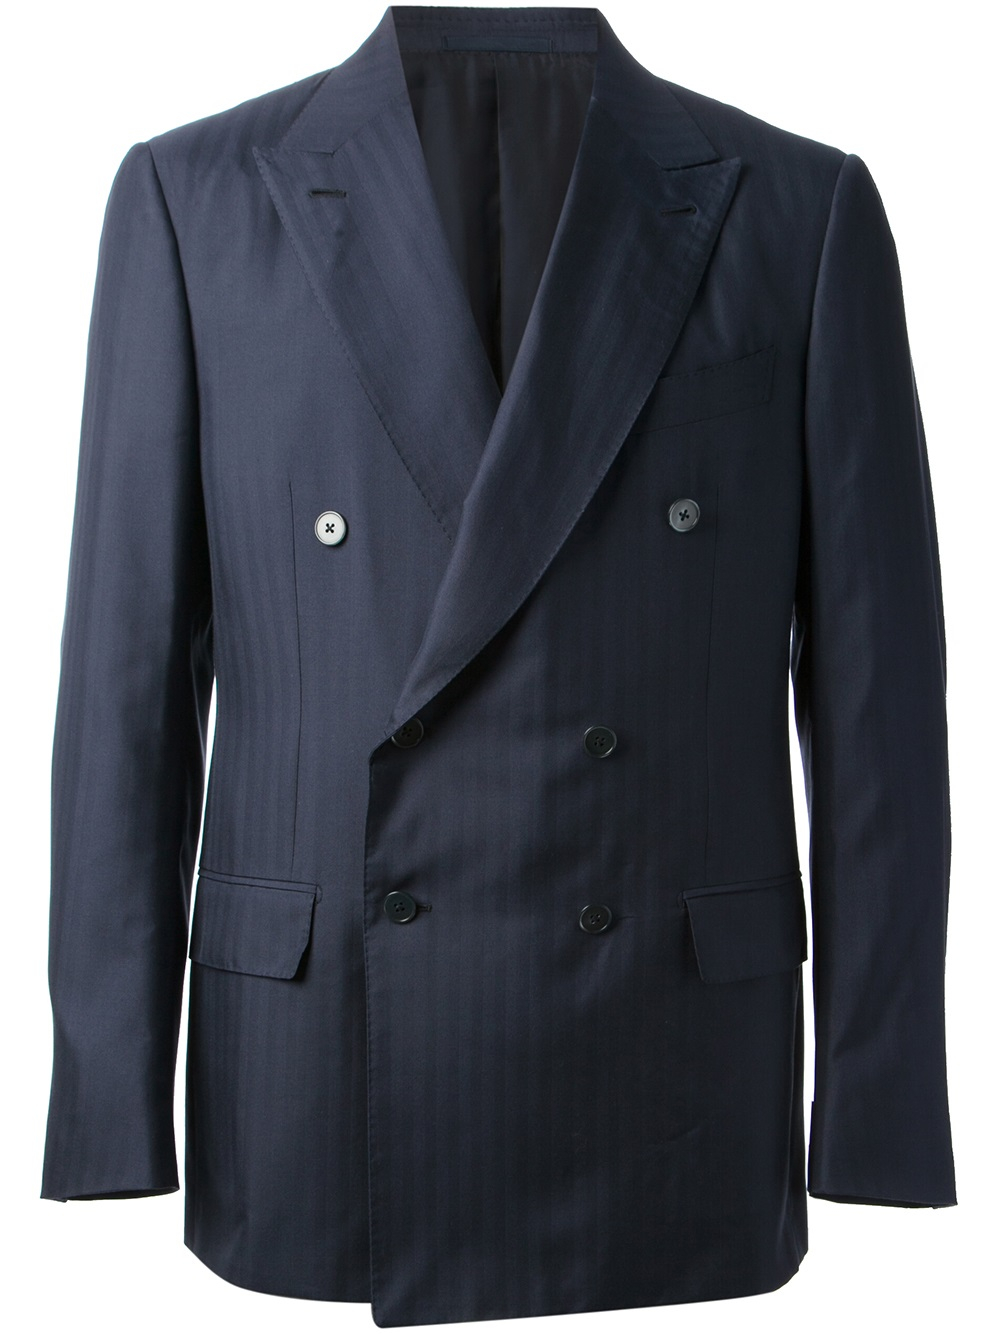 Ermenegildo Zegna Double Breasted Suit in Blue for Men - Lyst